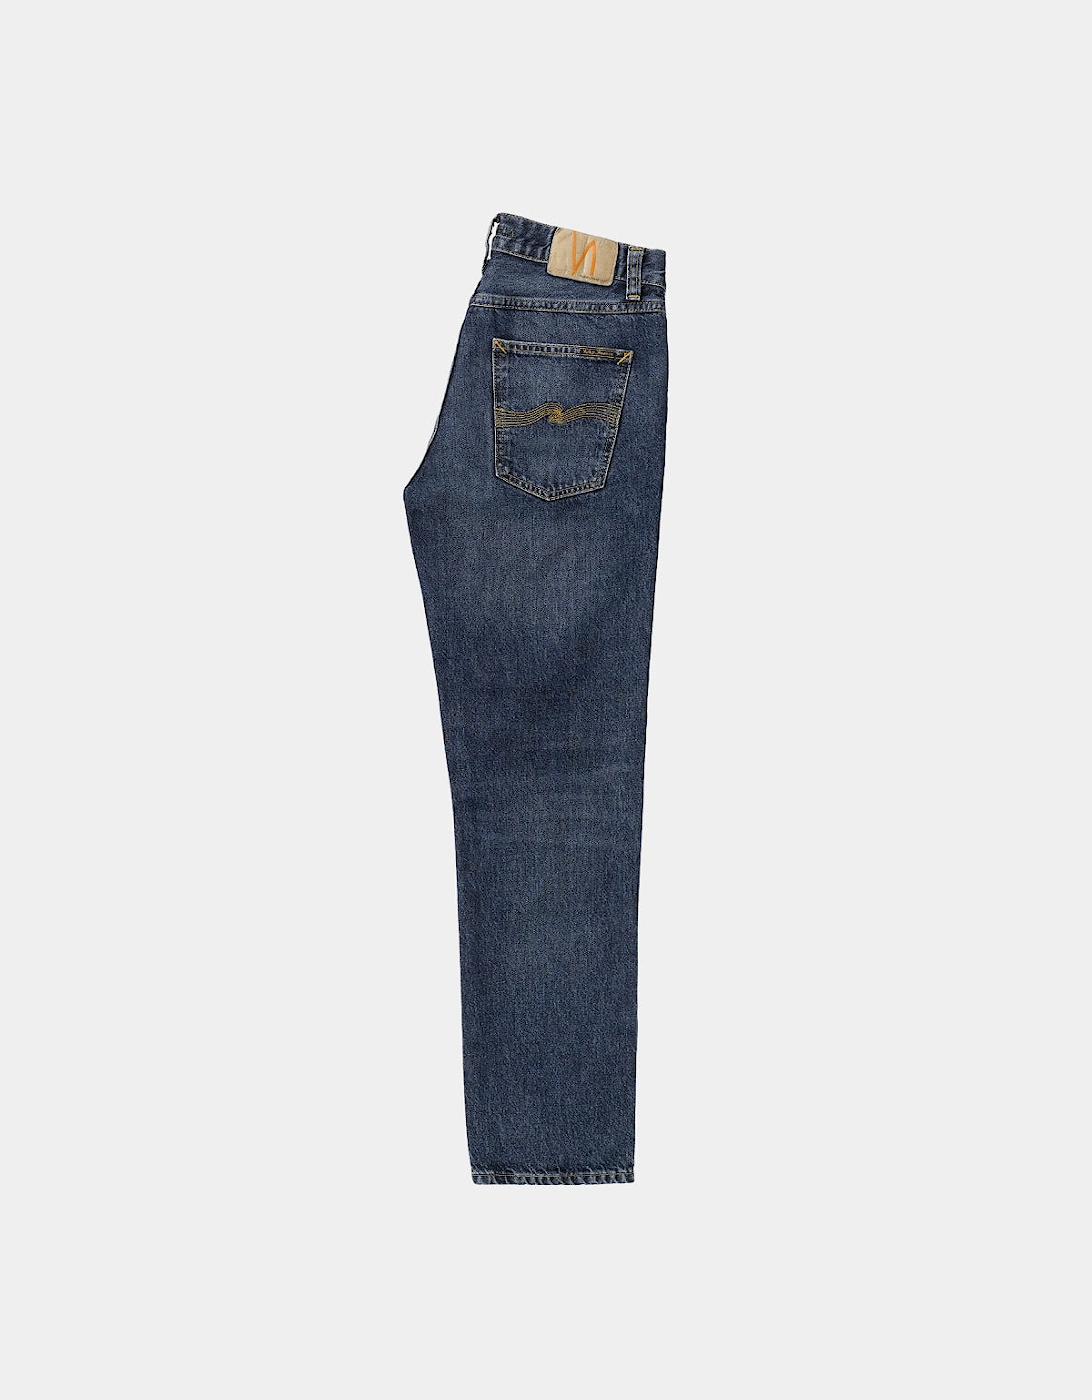 Nudie Gritty Jackson Jeans - Blue Slate